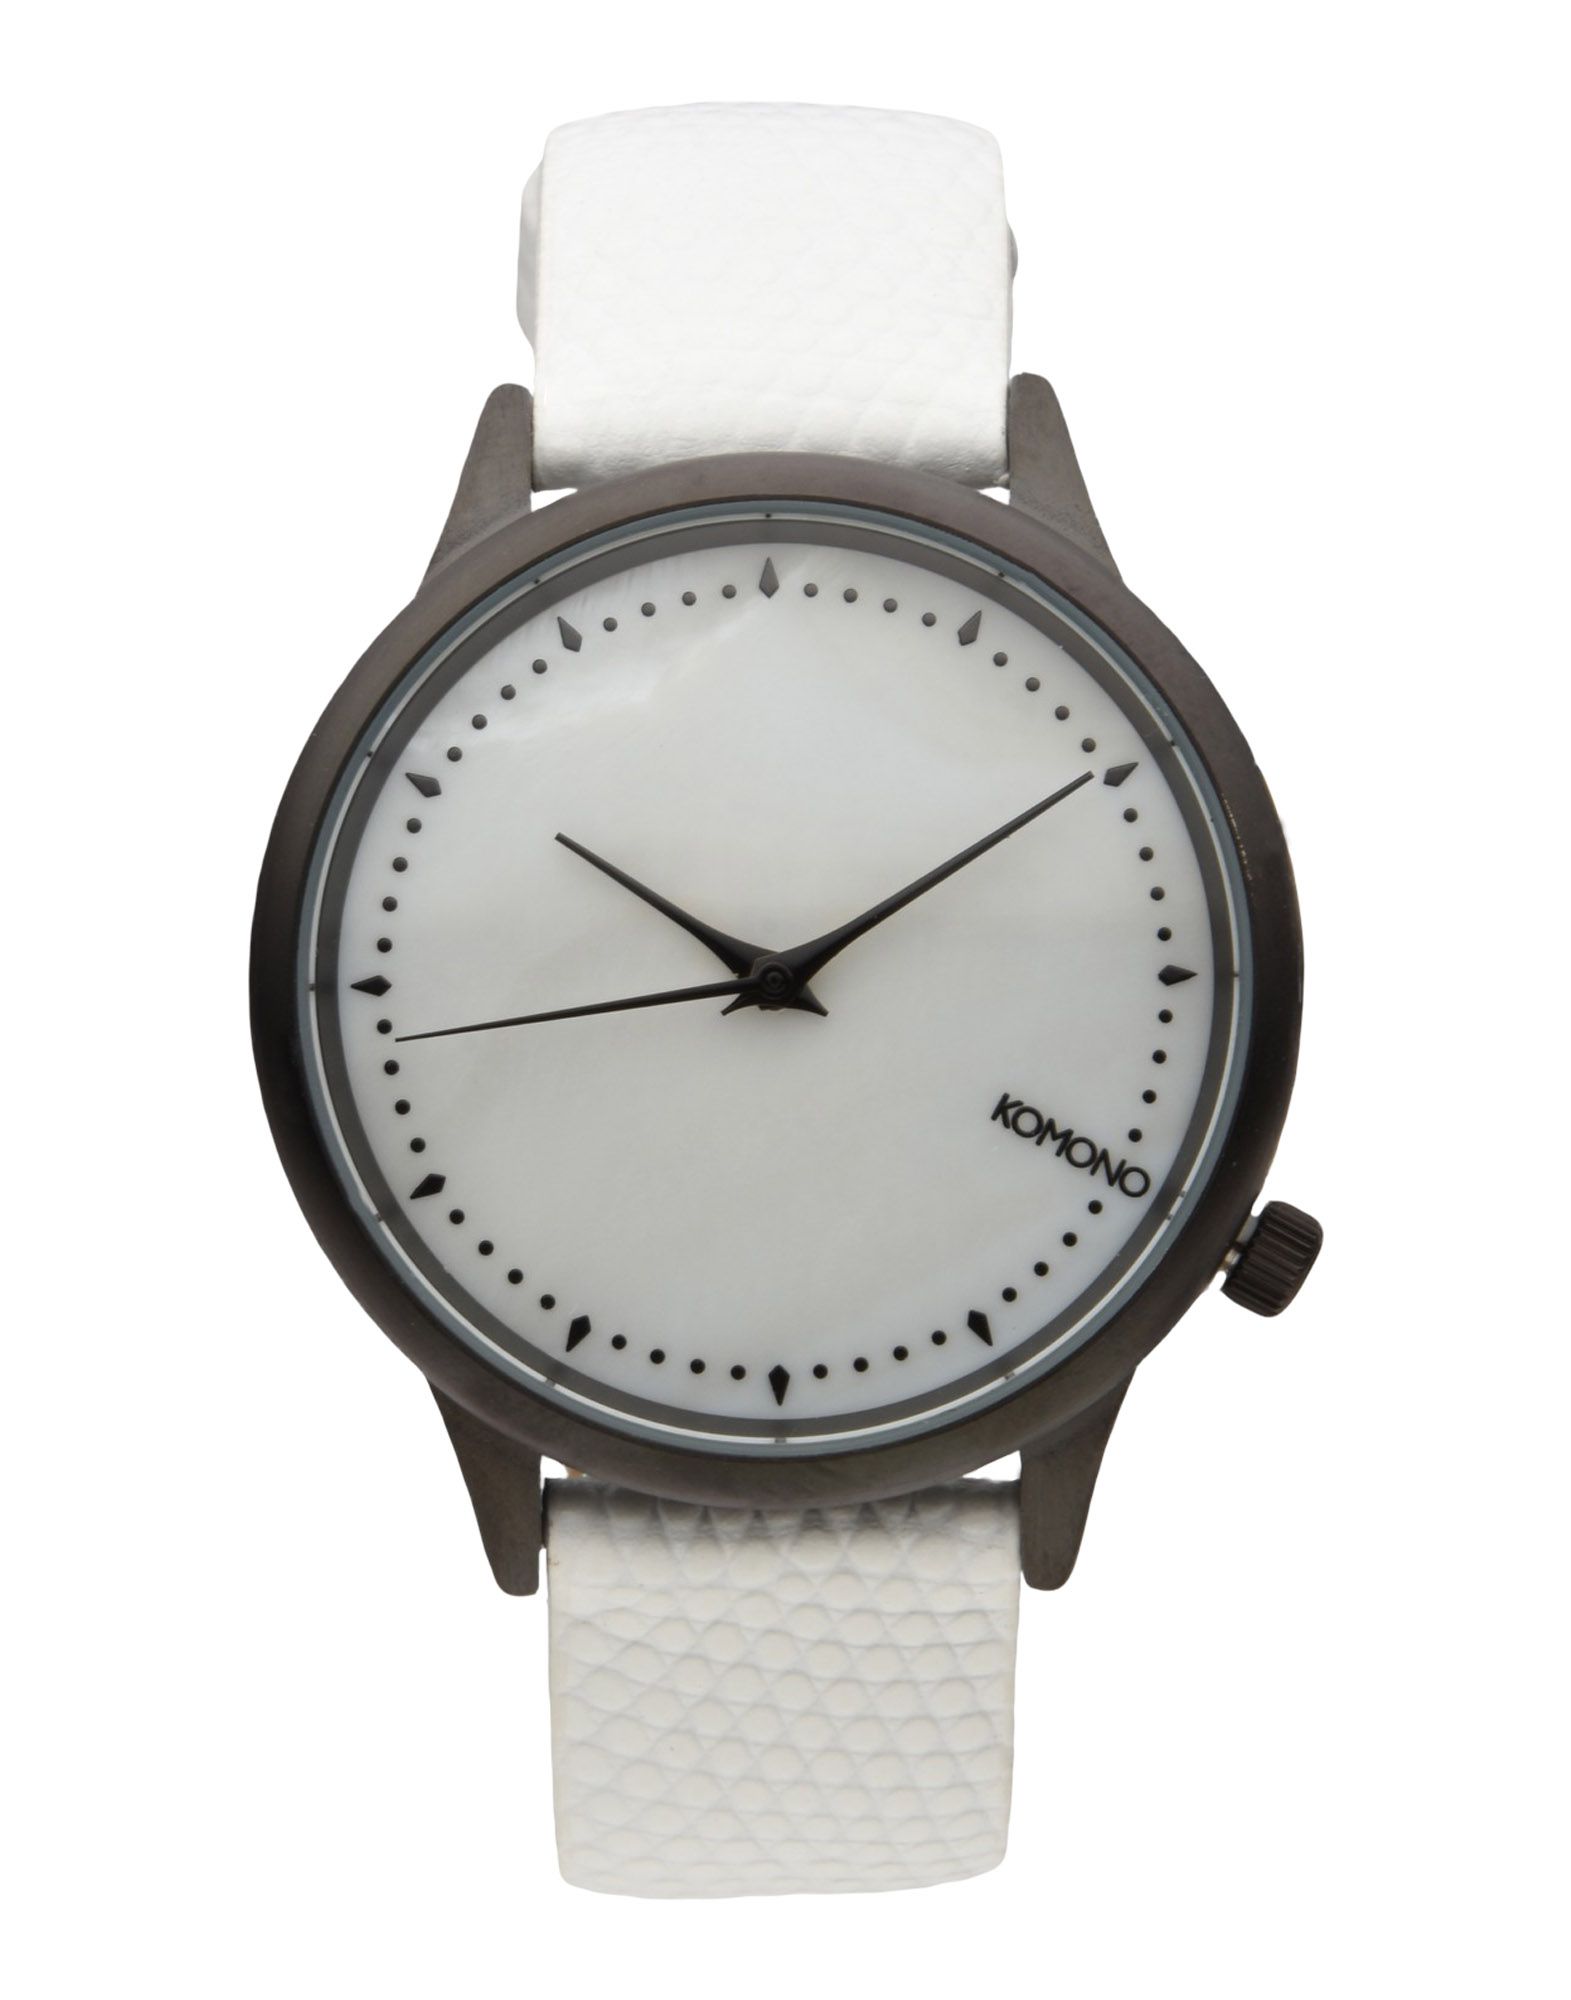 KOMONO レディース 腕時計 ホワイト ステンレススチール / 革 KOM-W2701 ESTELLE MONTE CARLO